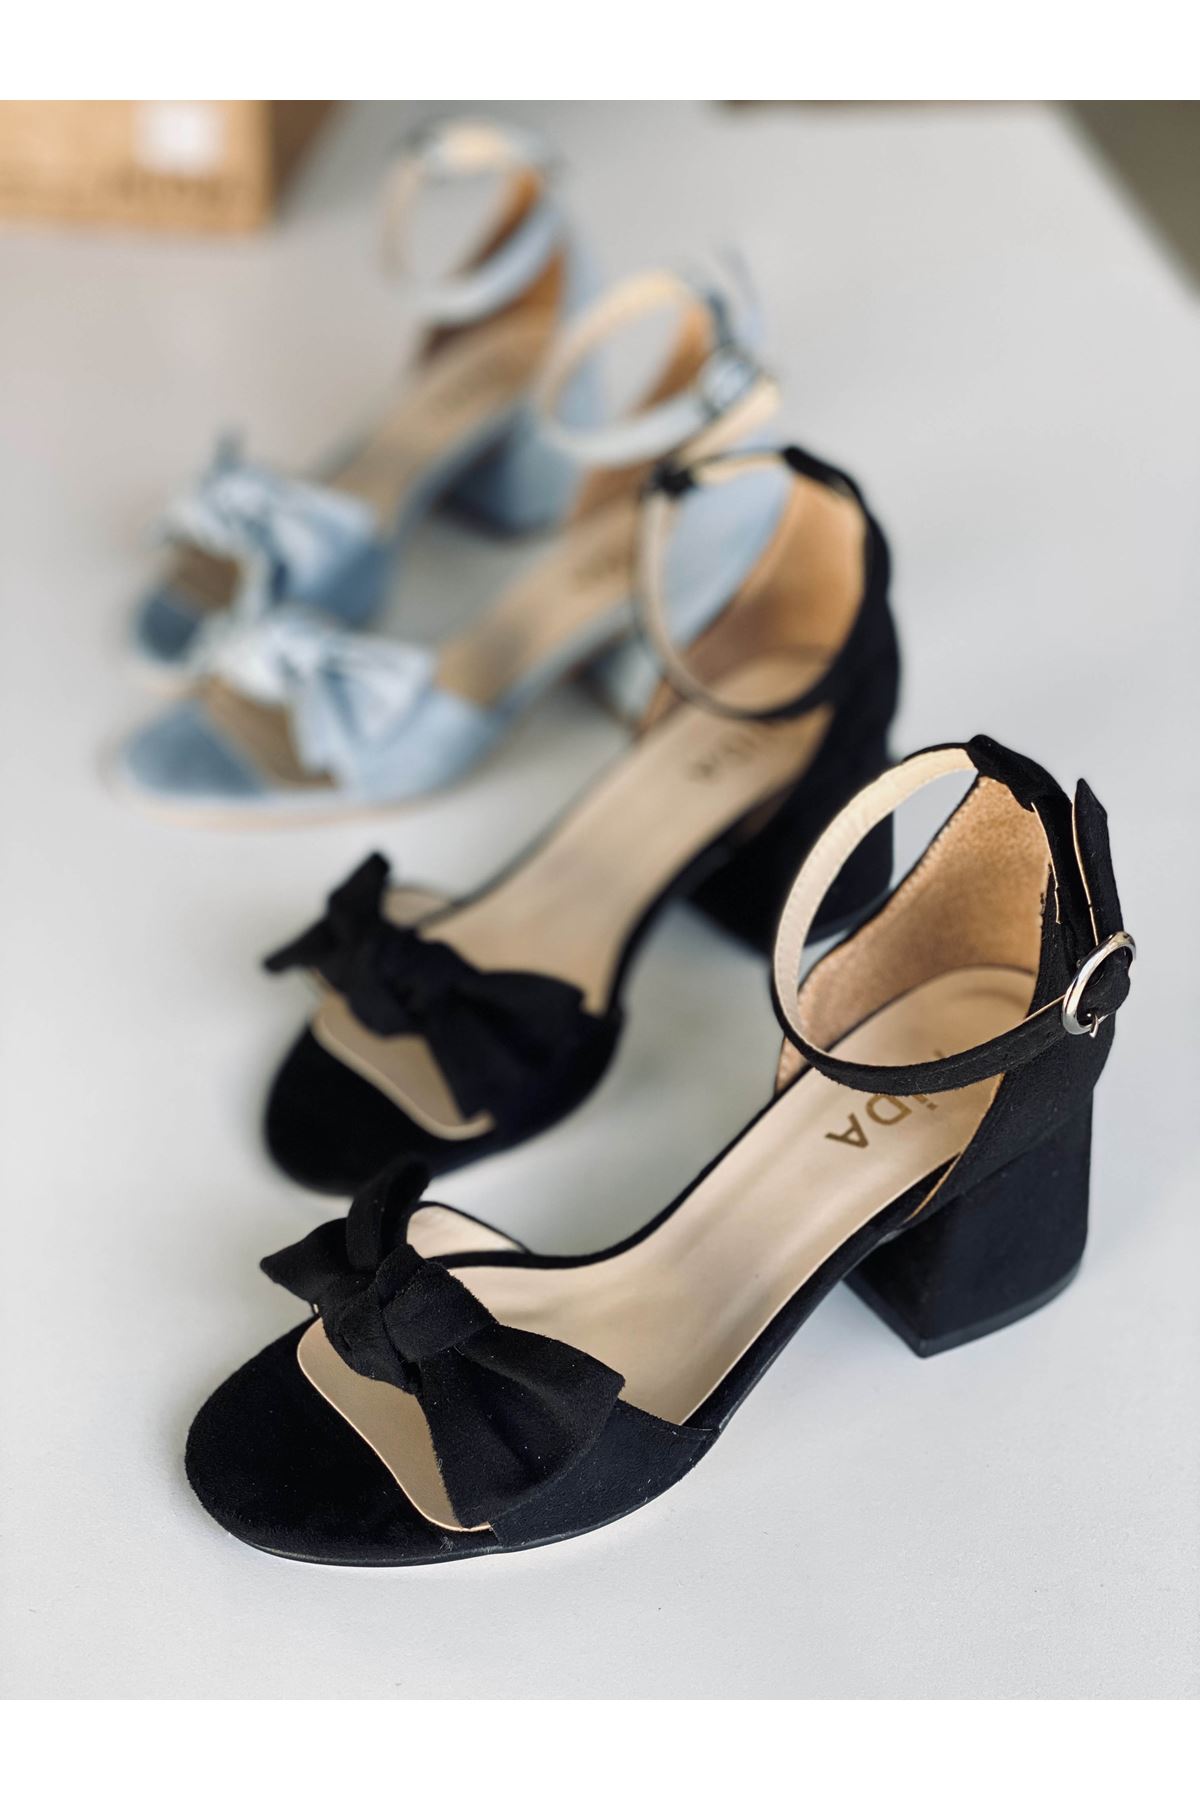 Mida Shoes Y553 Siyah Süet Topuklu Ayakkabı